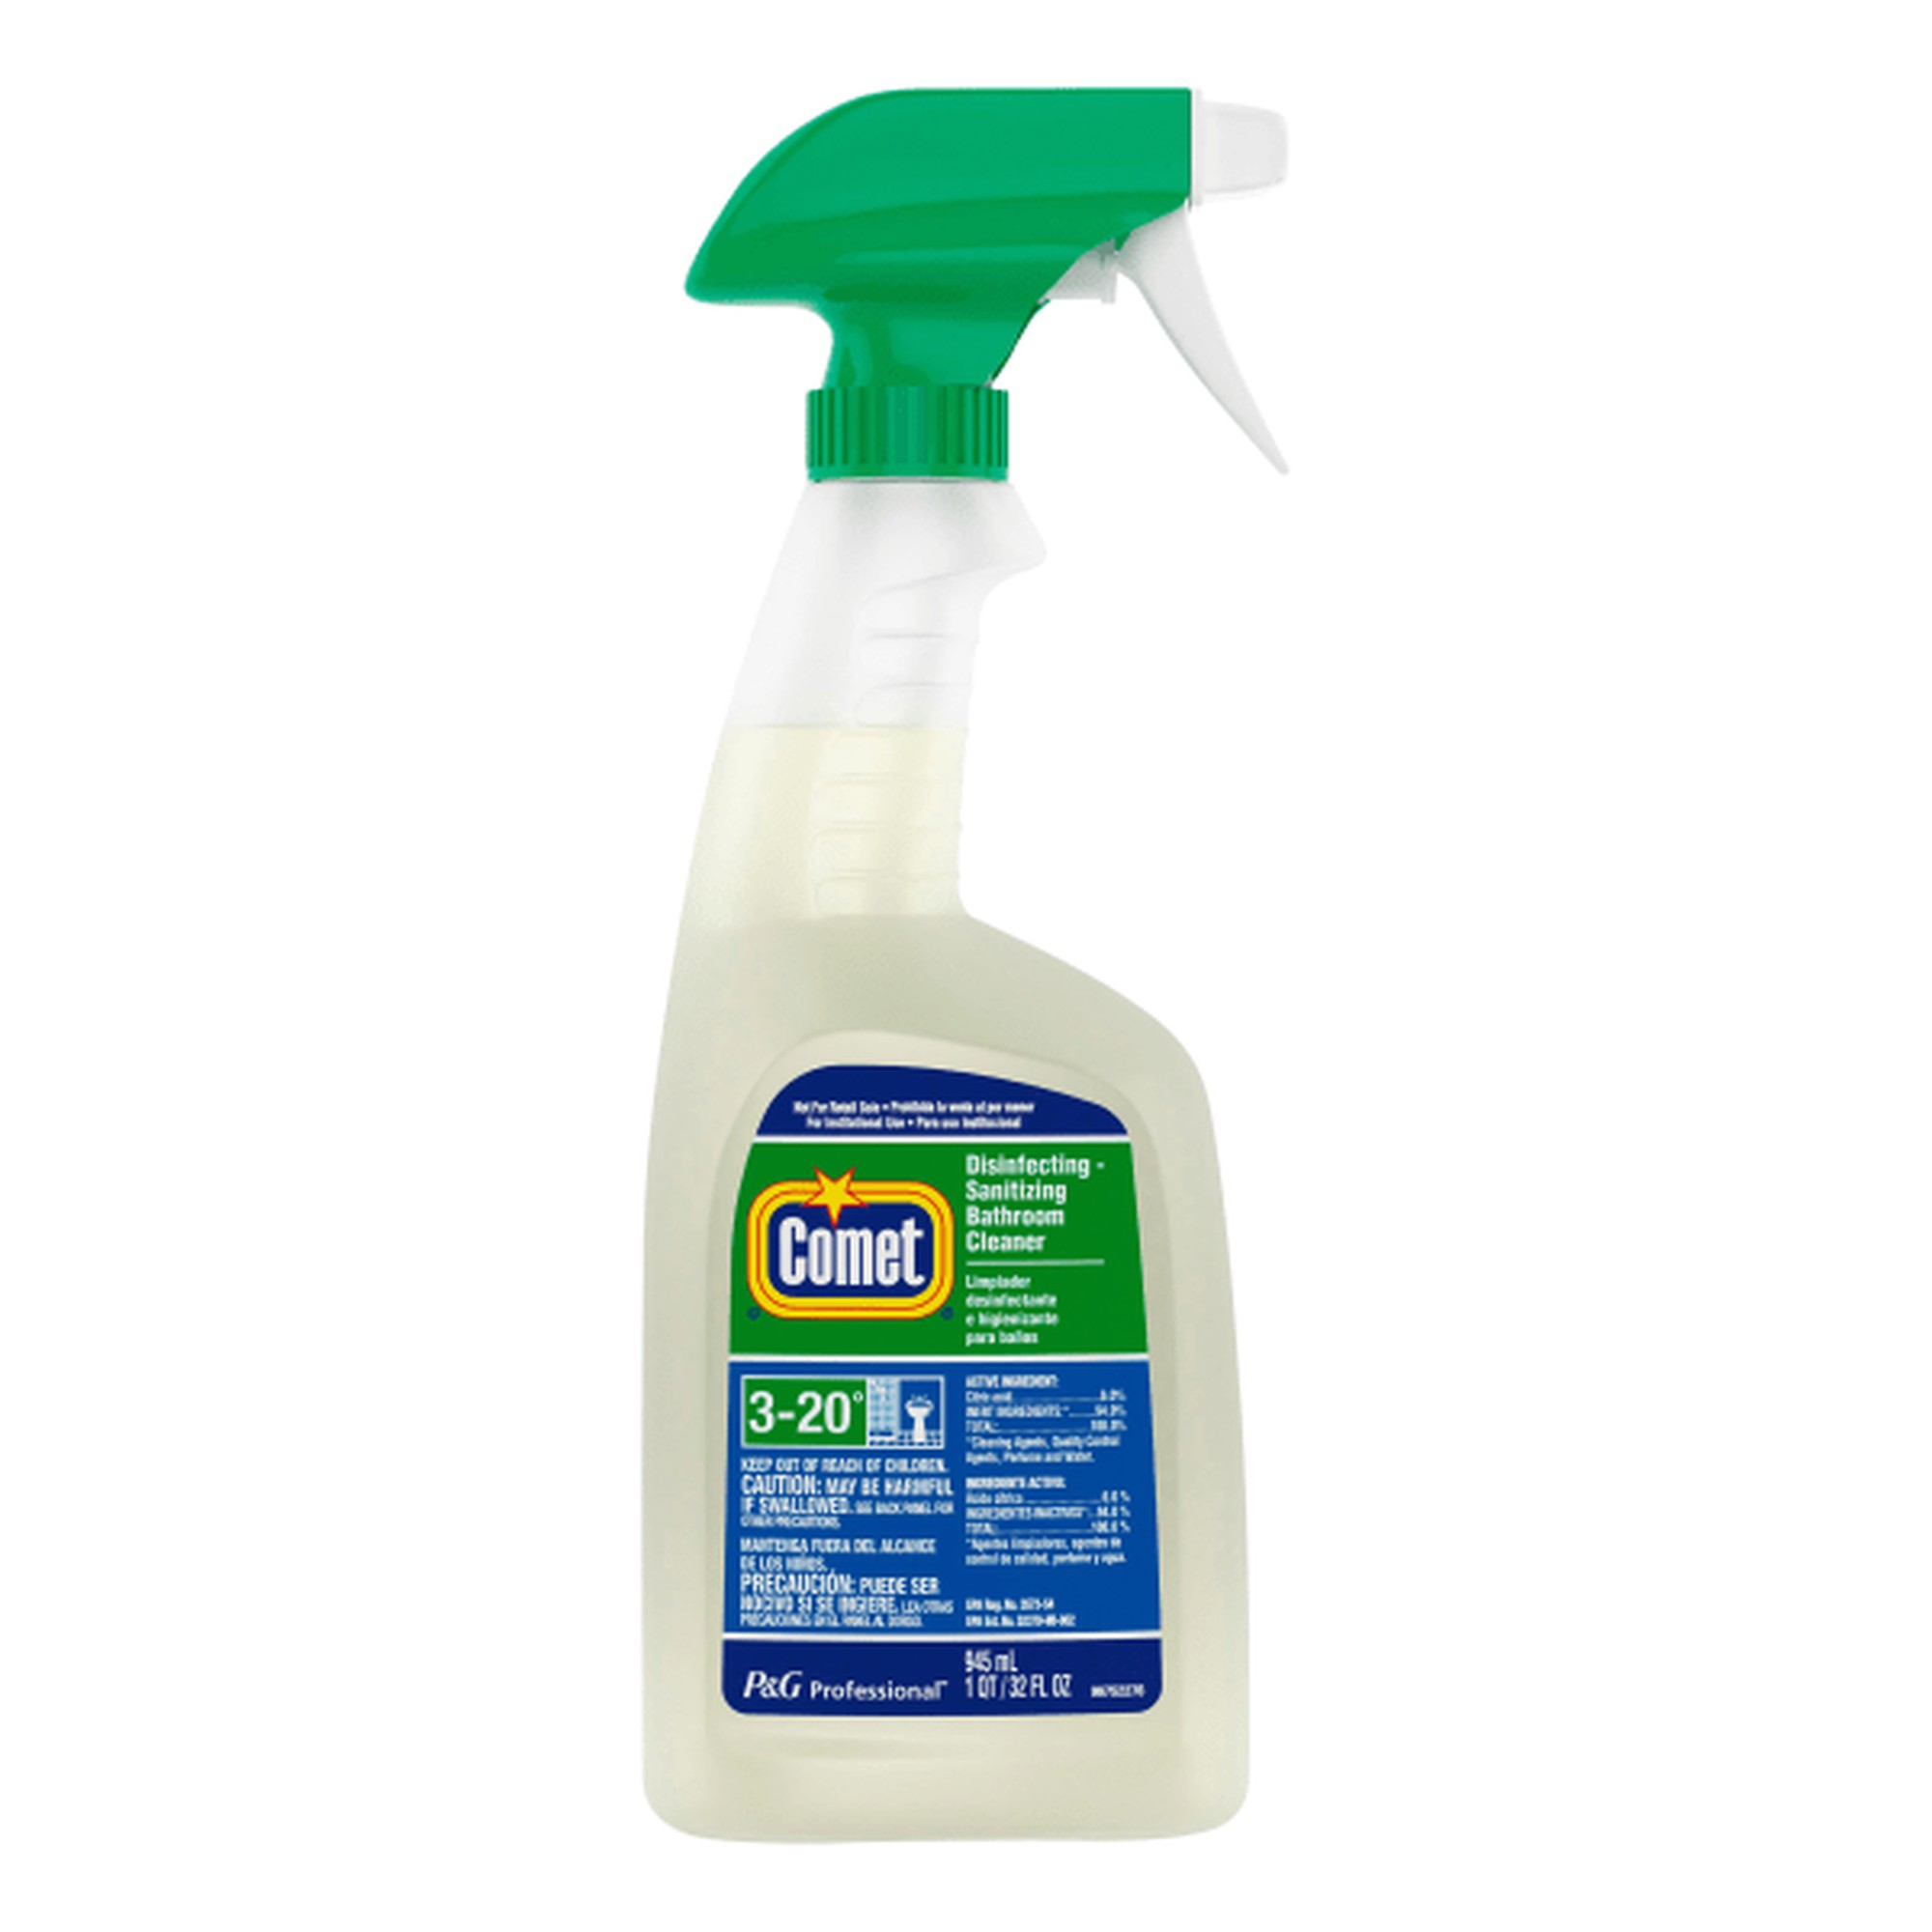 Disinfecting-Sanitizing Bathroom Cleaner, 32 oz. Trigger Bottle